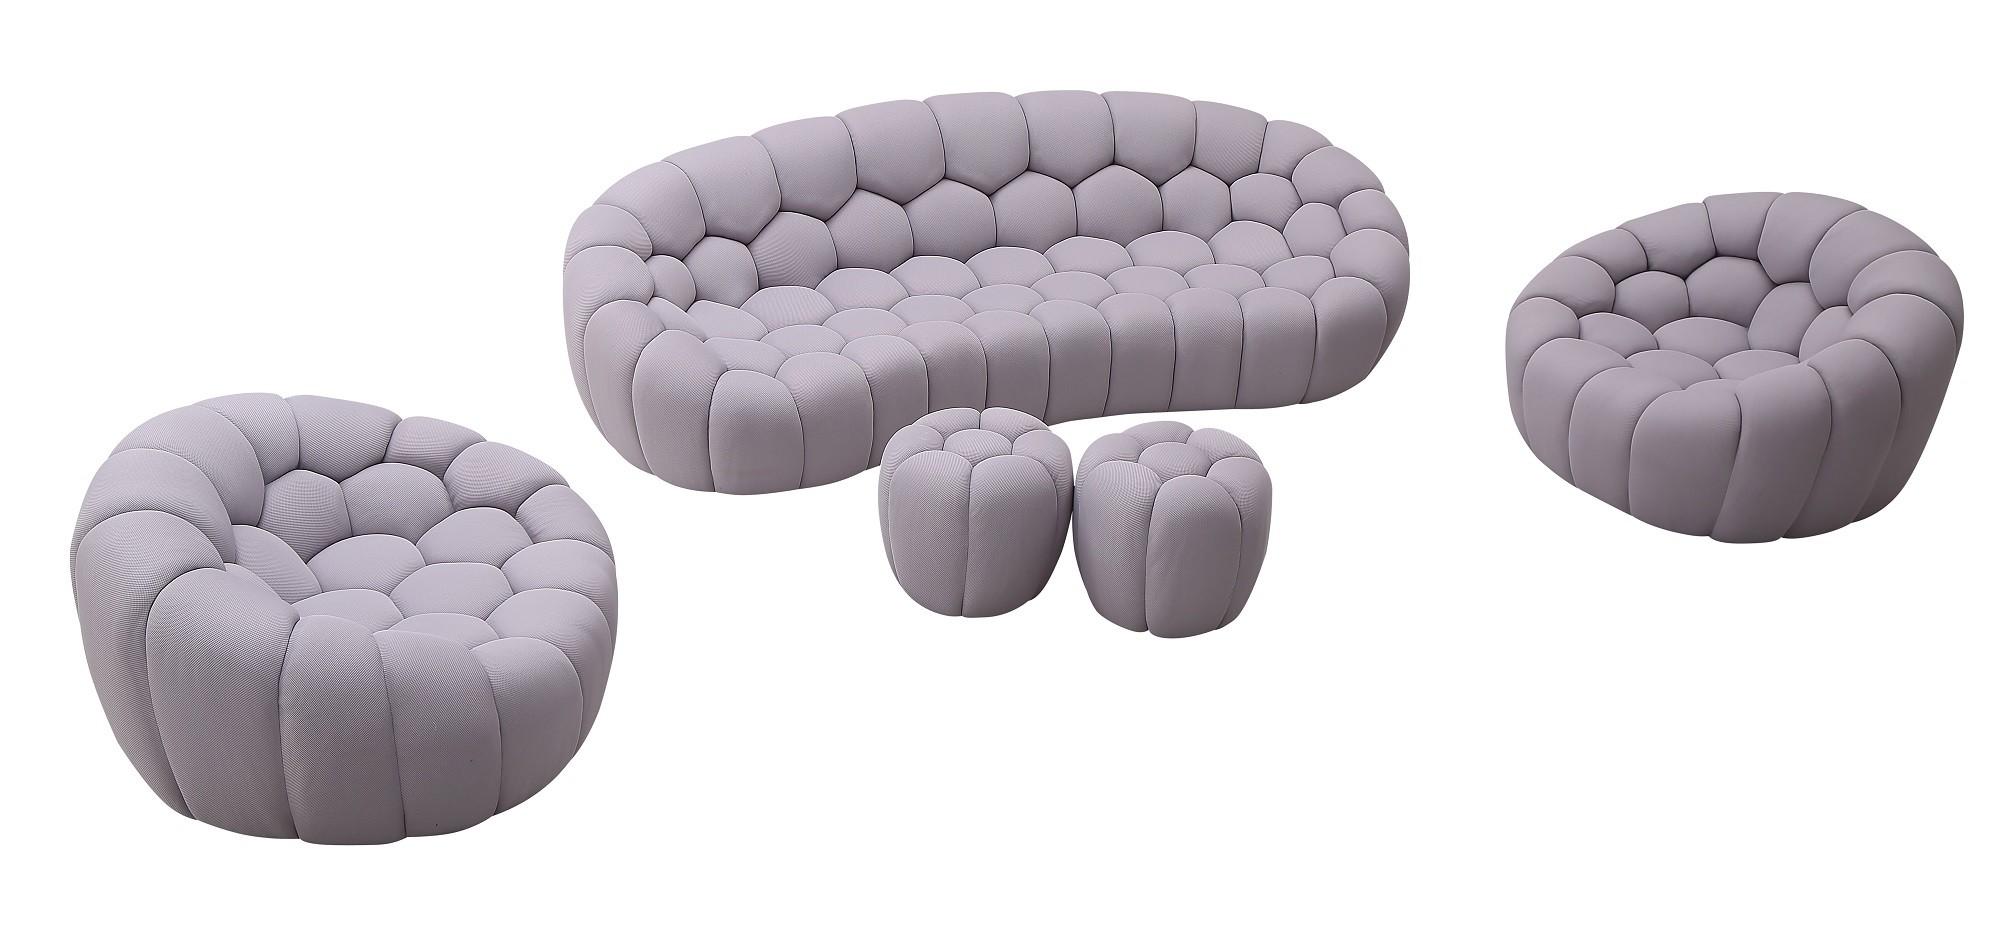 Contemporary Sofa Set Fantasy SKU 18442-GR-5PC in Light Gray Fabric